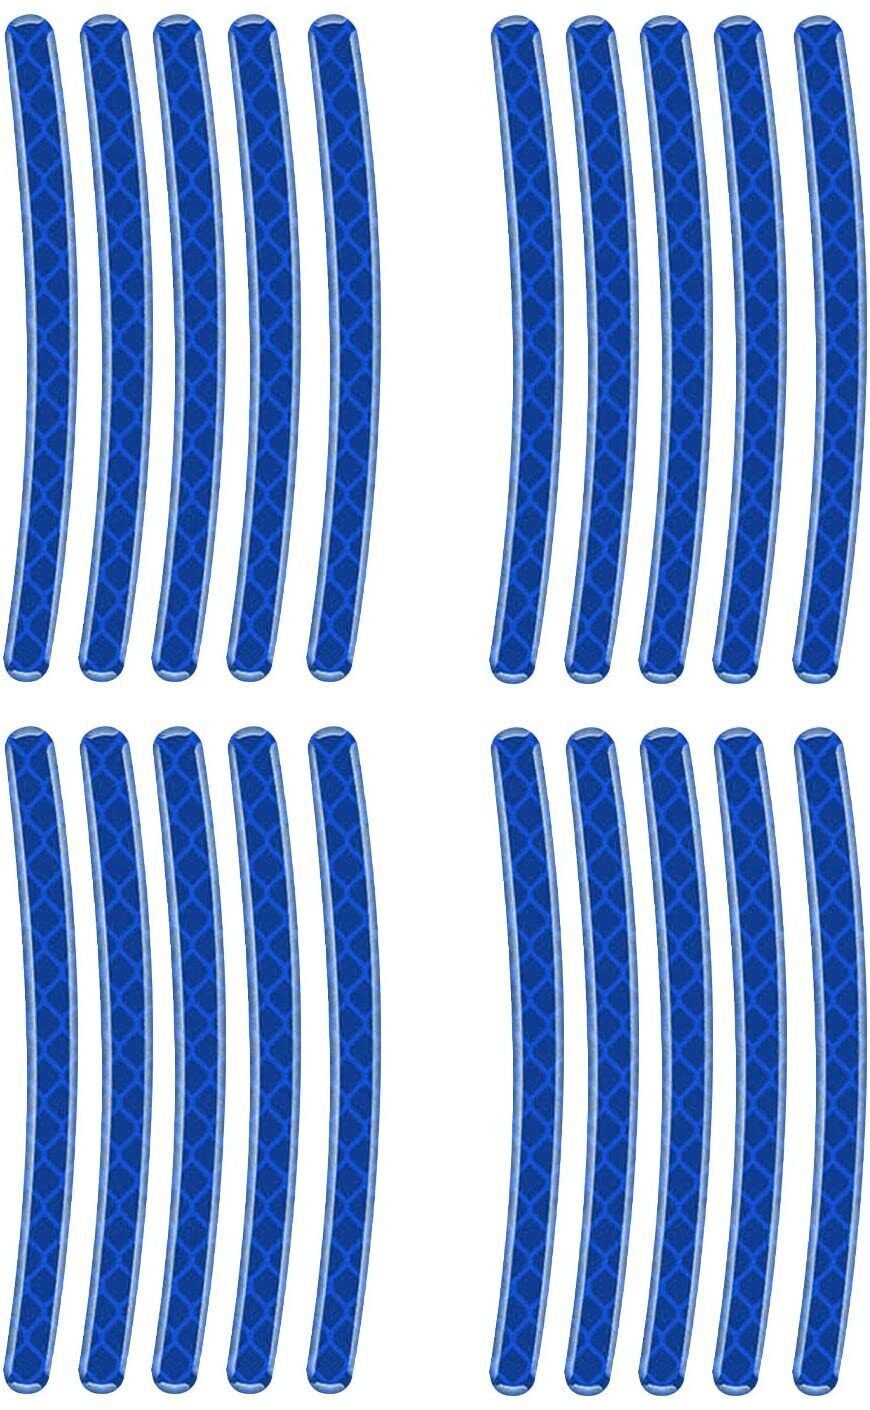 20Pcs Blue Car Motorcycle Wheel Hub Reflective Strip Sticker Safety Car Styling